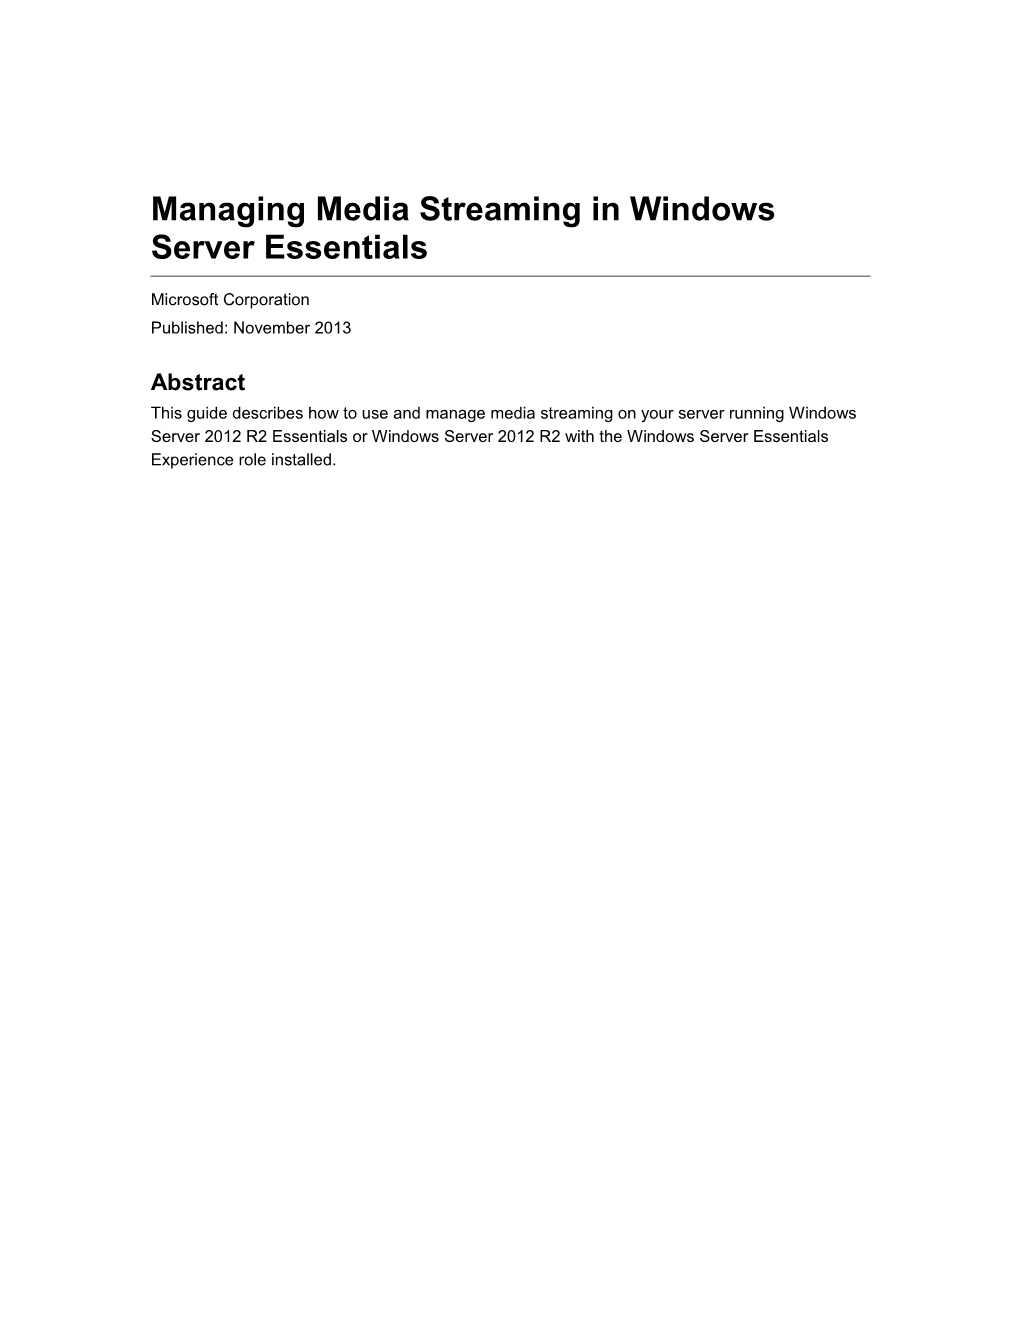 Managing Media Streaming in Windows Server Essentials